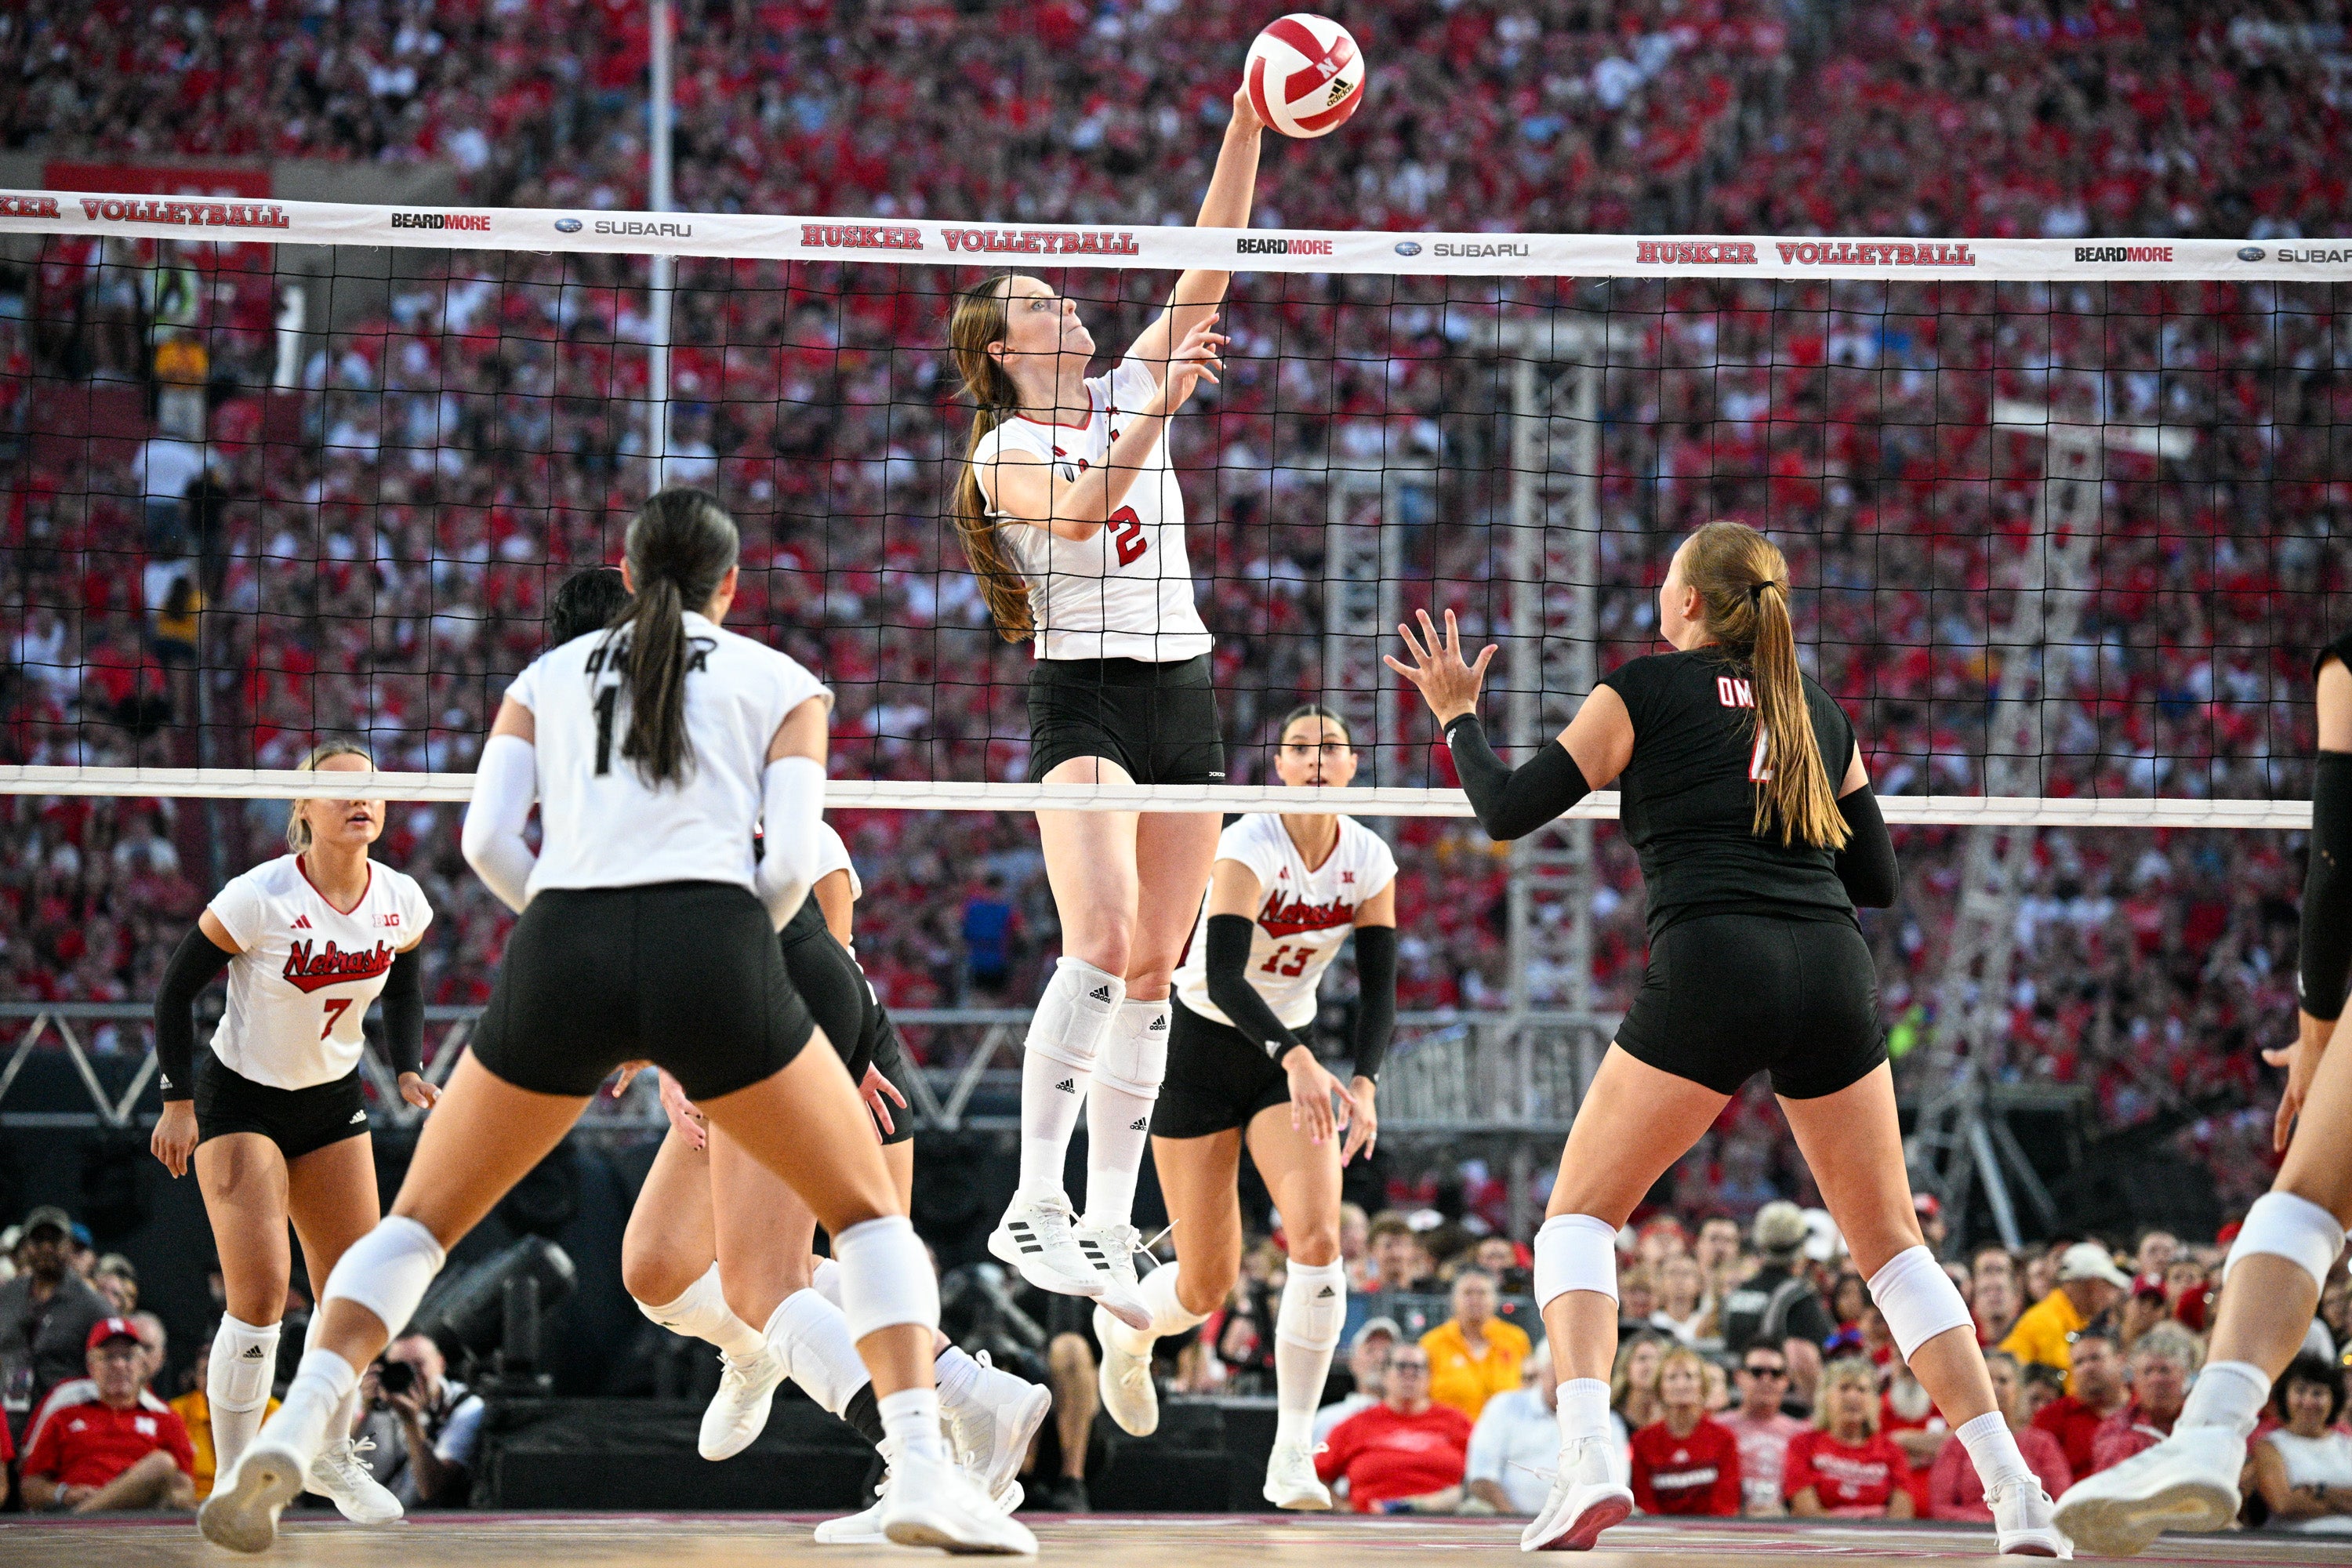 University volleyball match breaks attendance record for women s sport